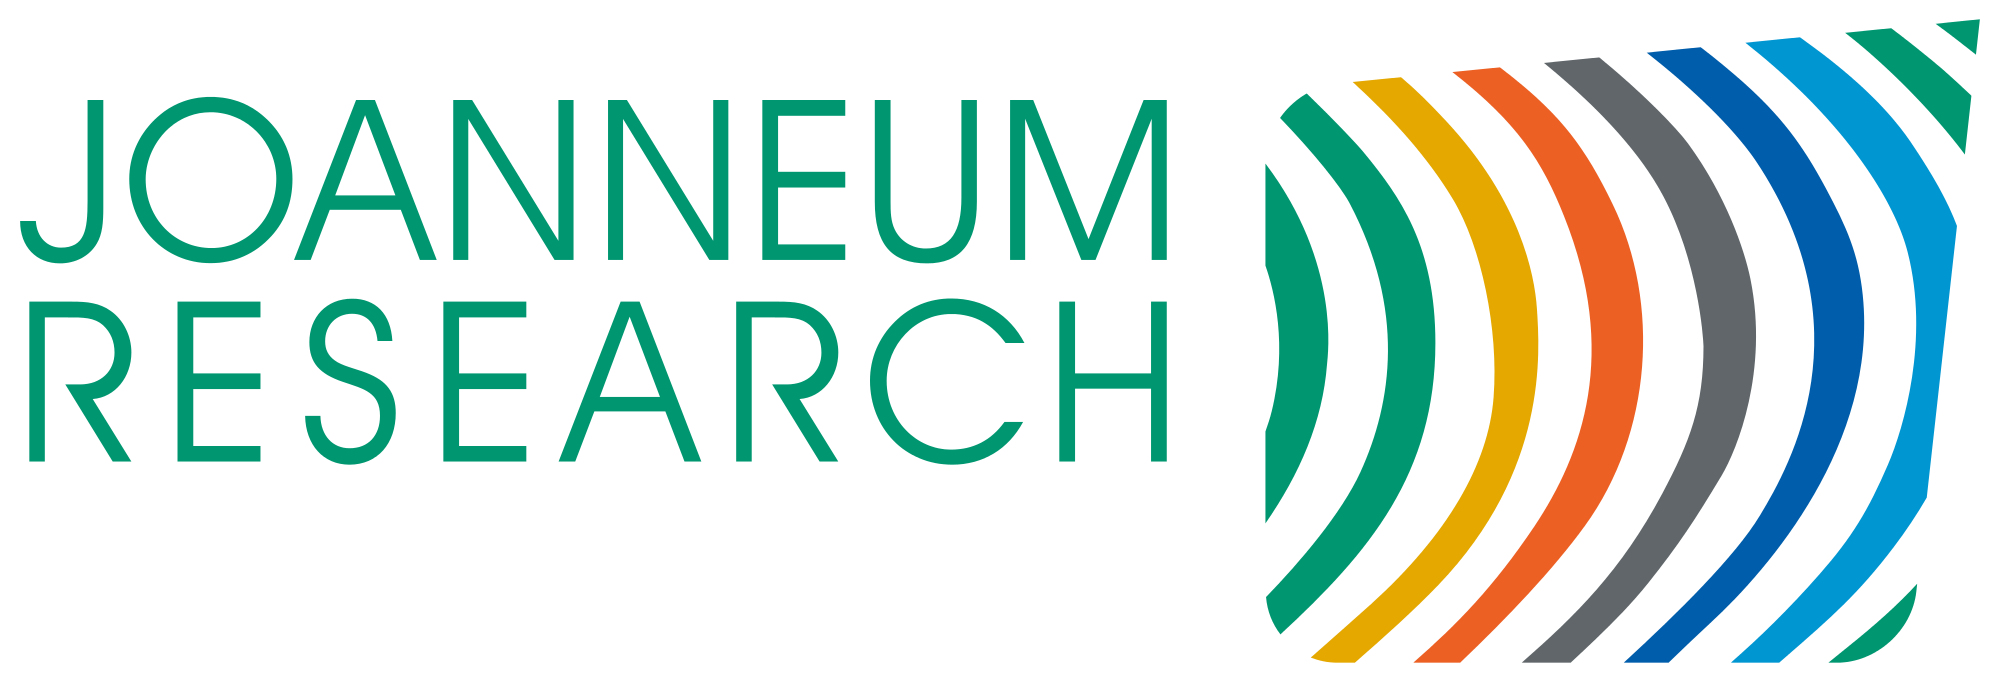 Joanneum Research logo